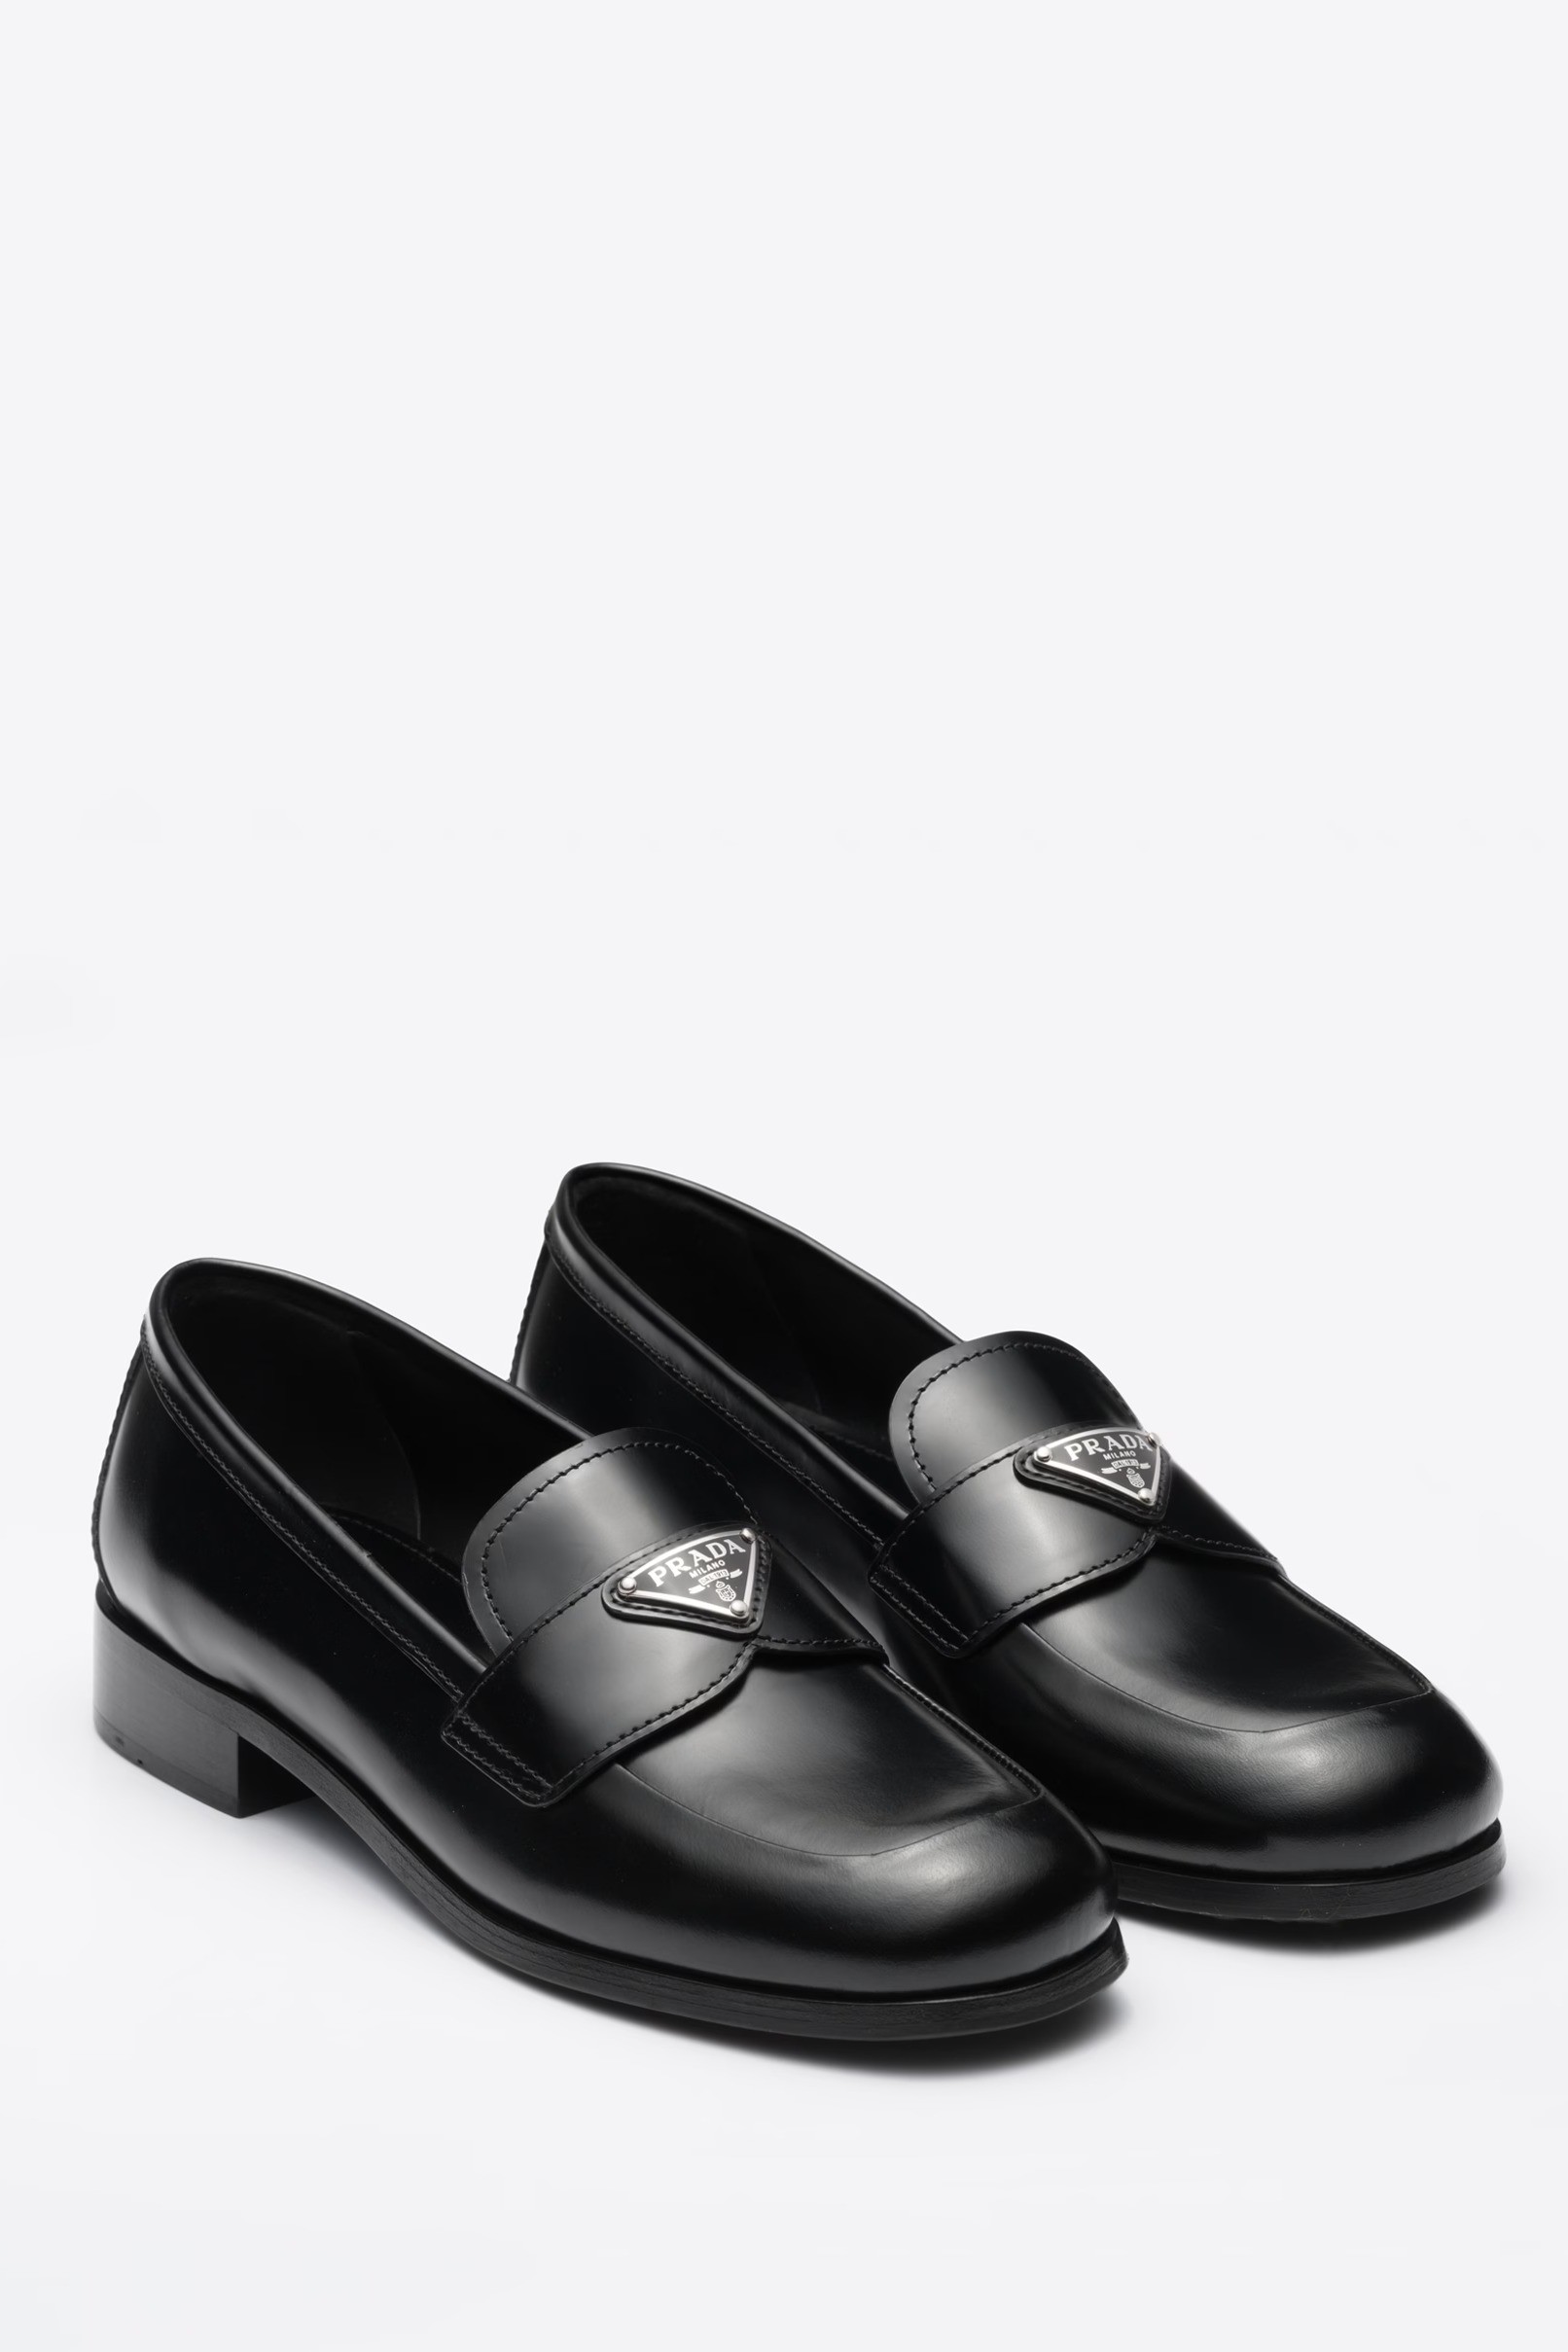 Prada - Brushed leather loafers - Black